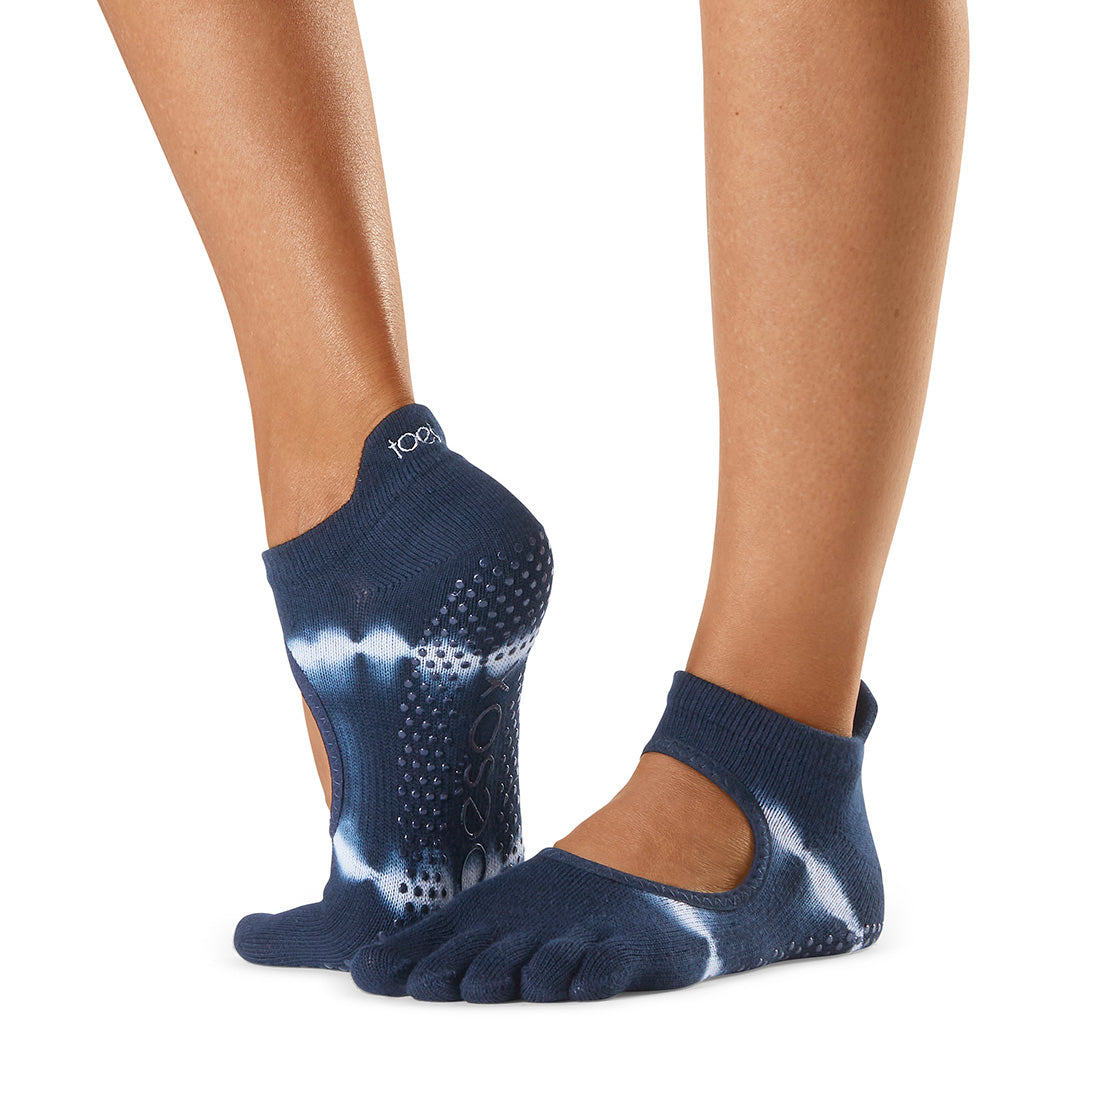 Buy ToeSox Grip Half Toe Bellarina Socks, Dance Socks and can be